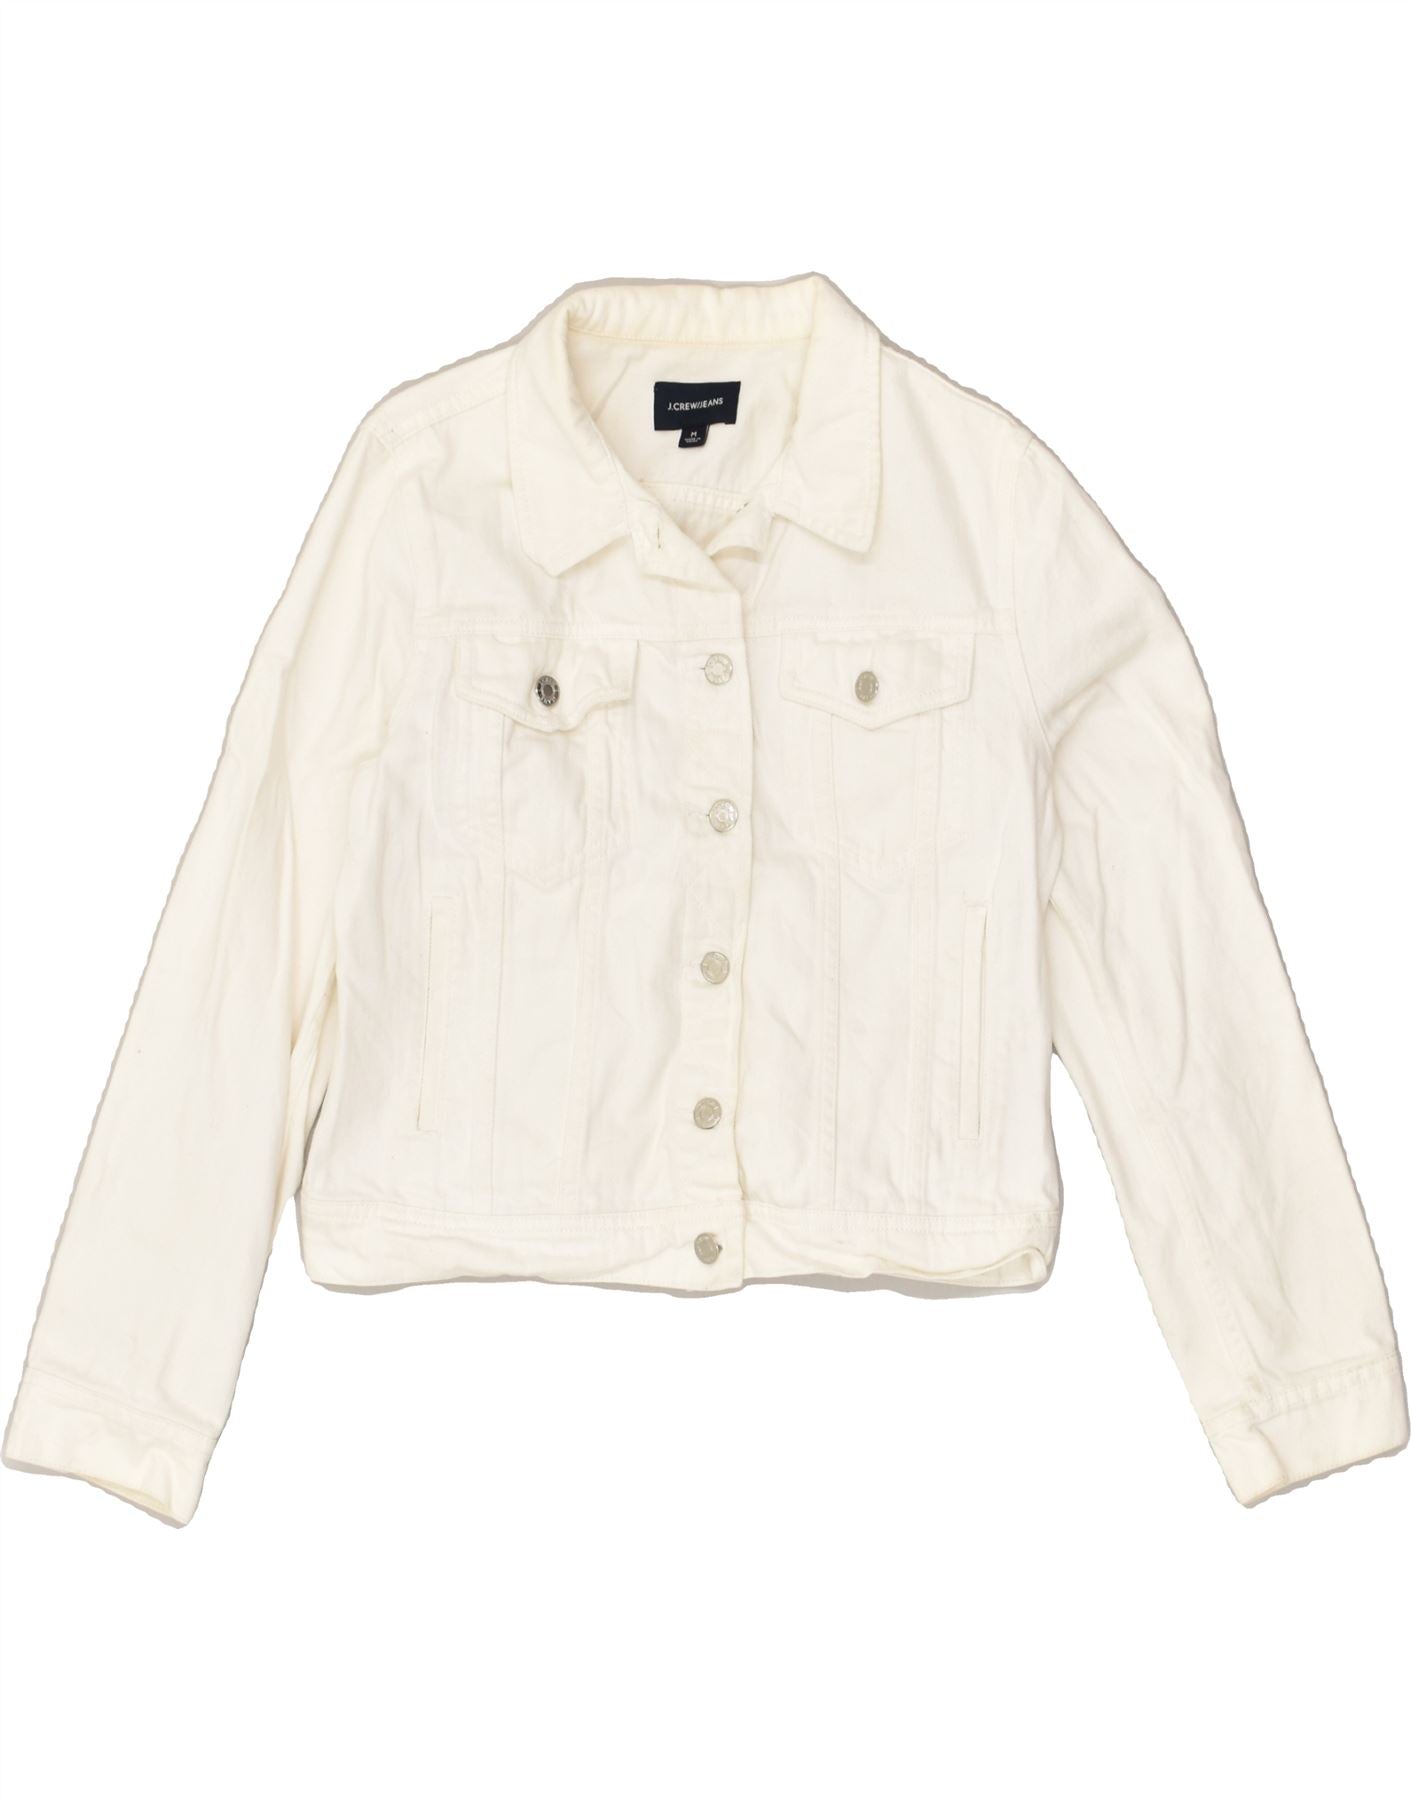 J. Crew Factory | Jackets & Coats | Newj Crew Classic White Denim Jacket  Size Xsmall | Poshmark